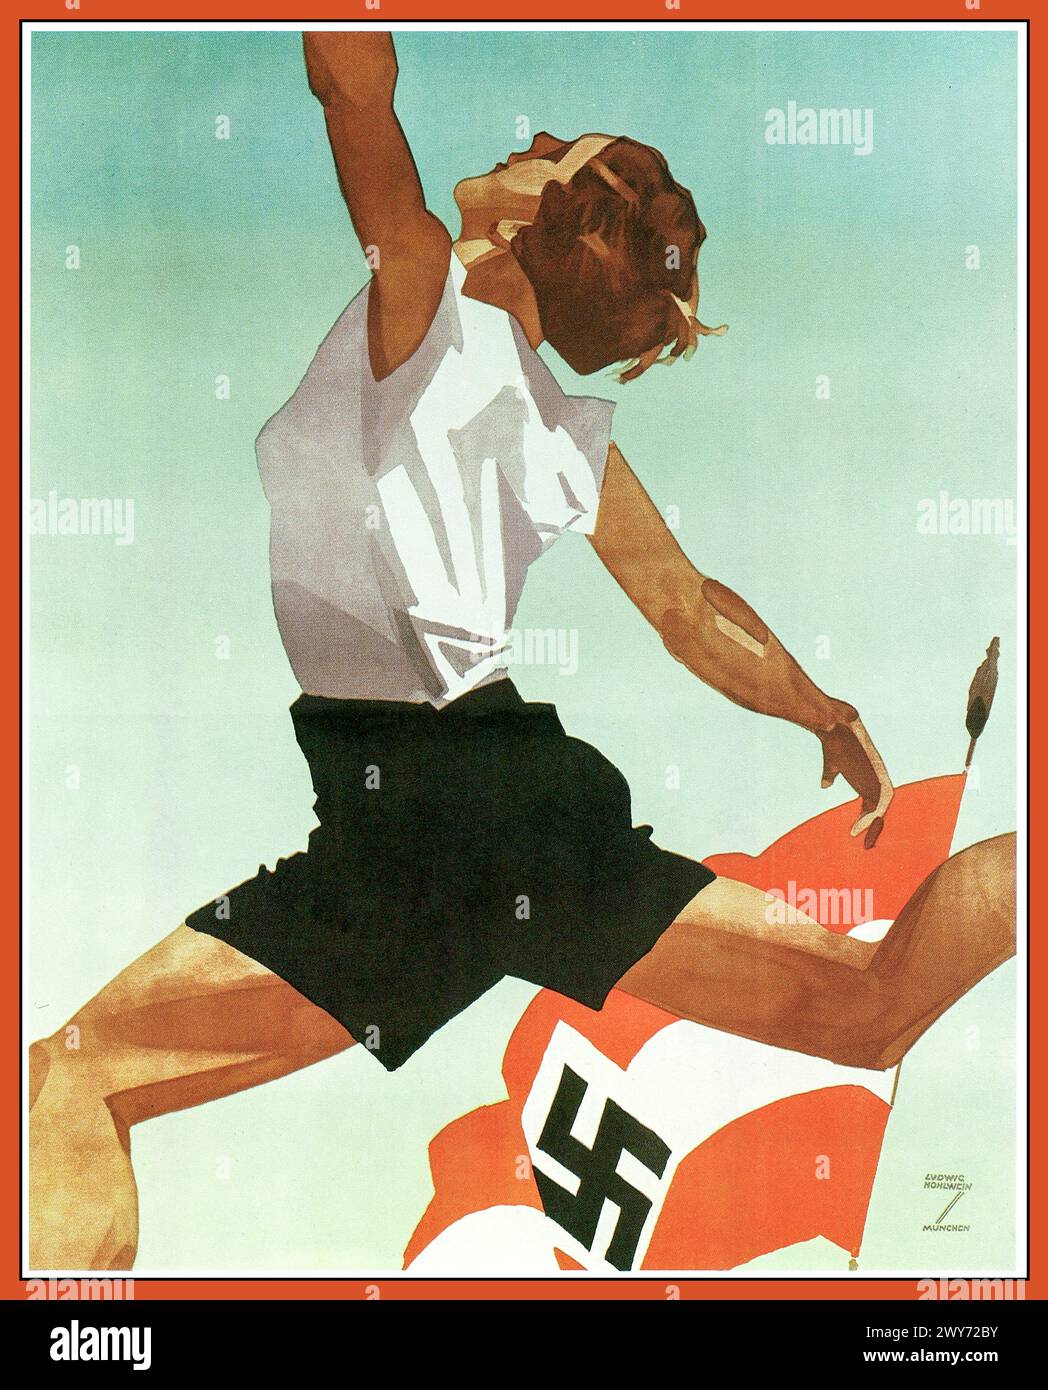 1930s Nazi Propaganda Poster linking the Nazi swastika flag with health wellbeing and sport. by prolific Nazi regime artist : Ludwig Hohlwein Munich Nazi Germany Poster, design by Ludwig Hohlwein / Munich) c1936. Stock Photo